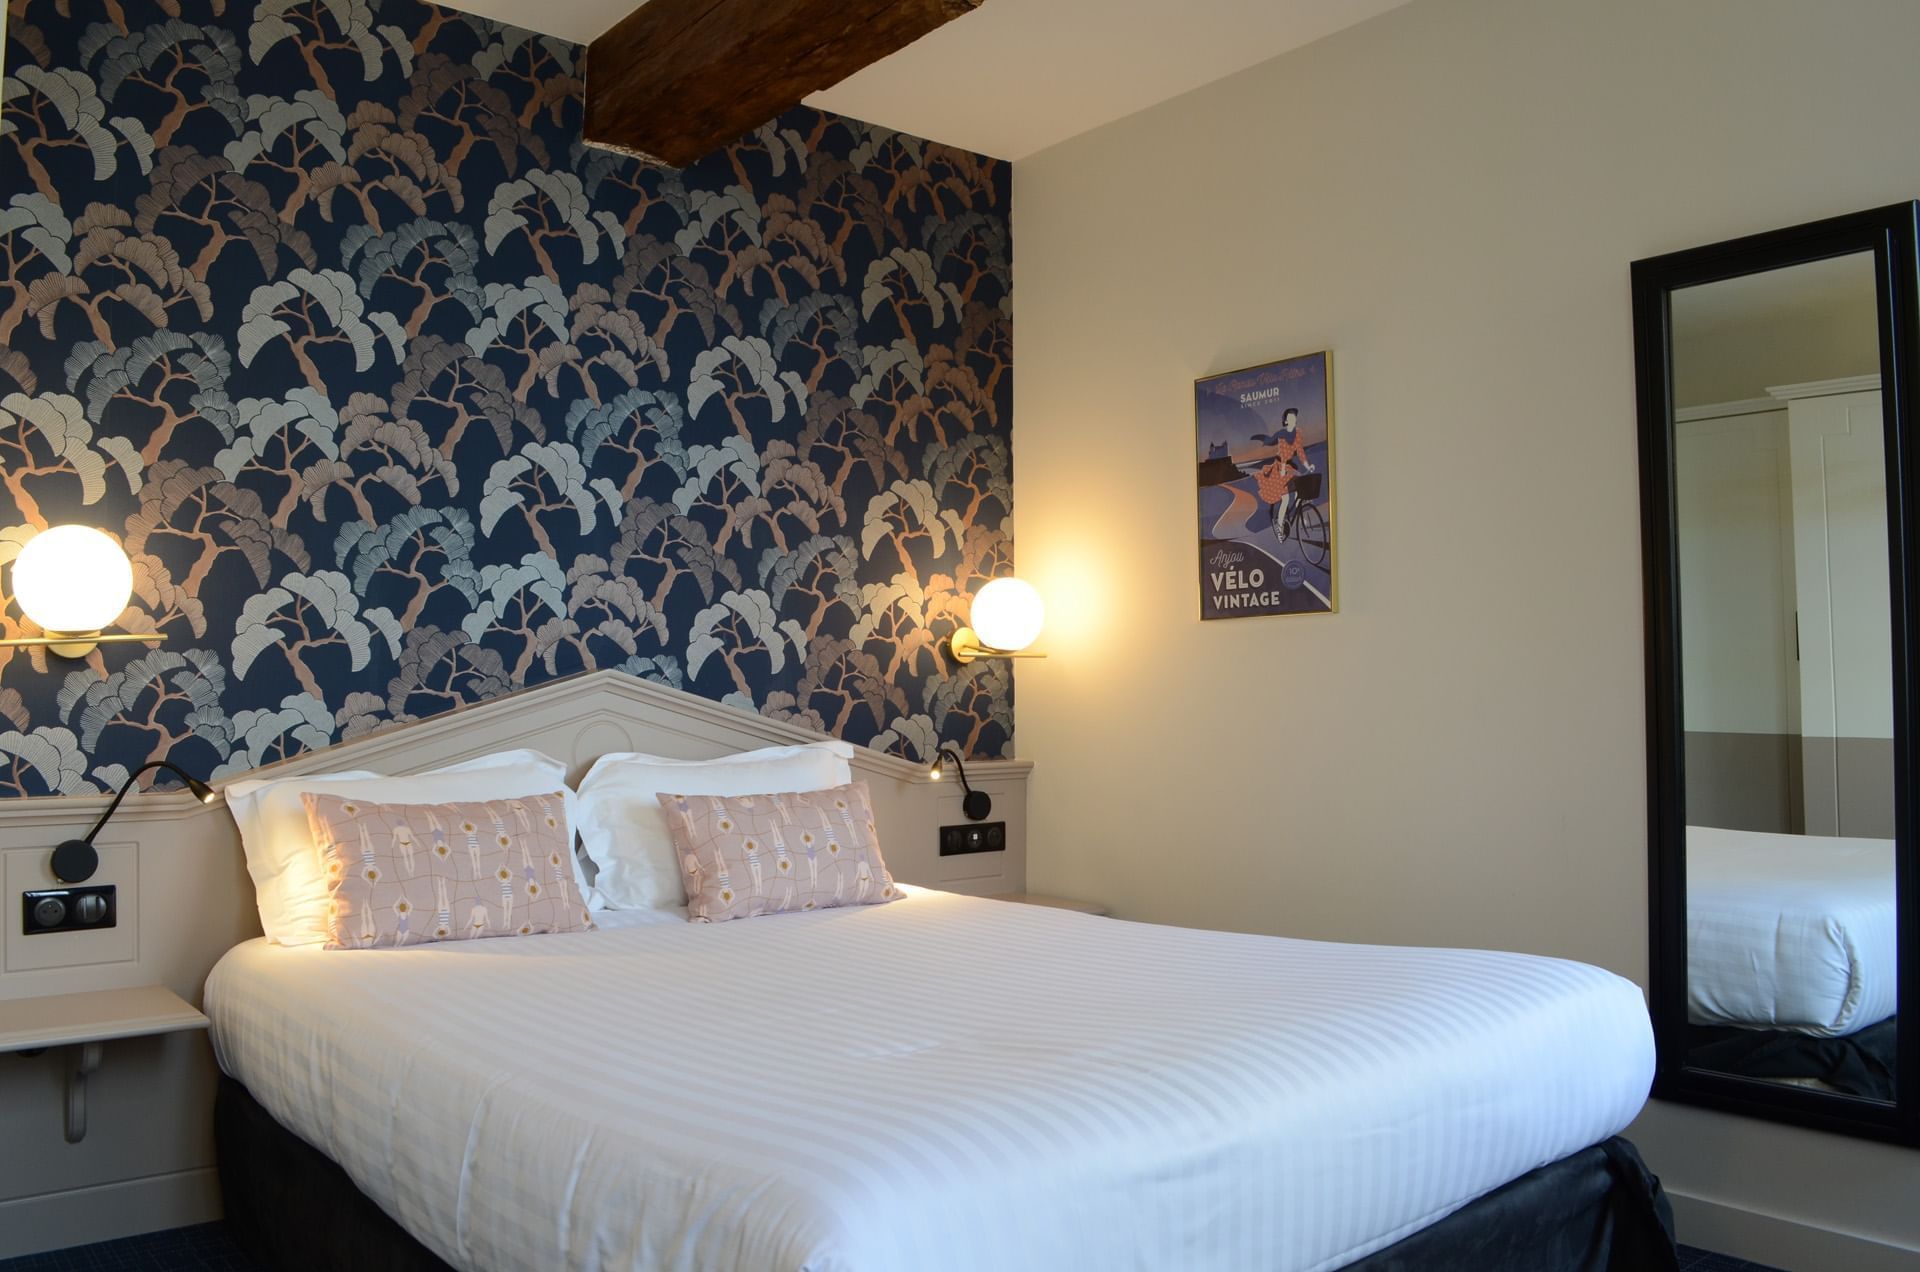 Superior Room at Hotel Anne d'Anjou in Saumur, France